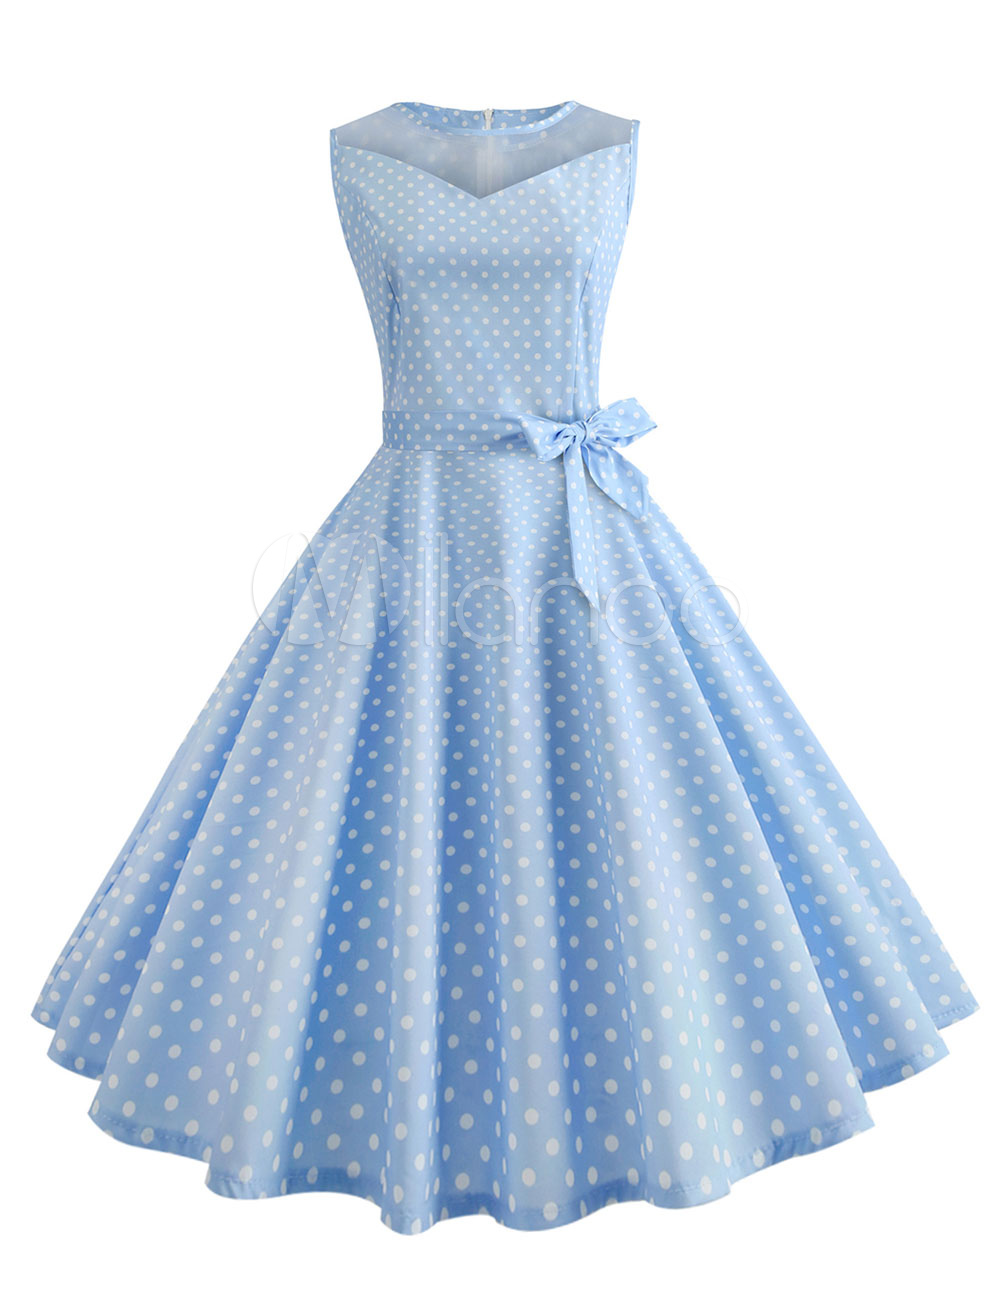 FEDULK Womens Sleeveless Classic Vintage 1950s Polka Dot Print Patchwork Swing Dress 